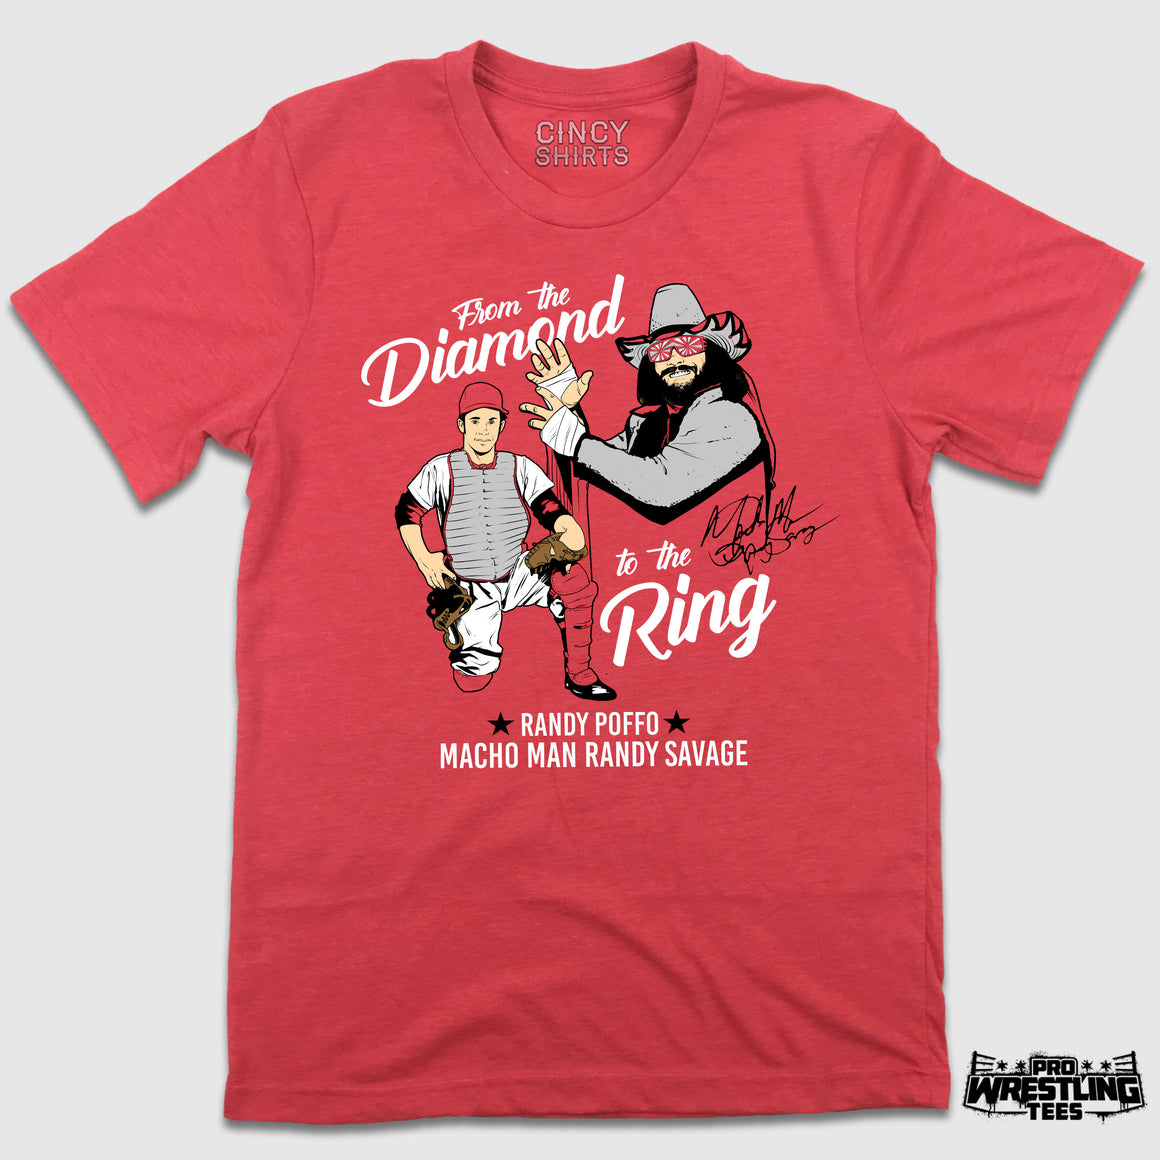 Macho Man Randy Savage "From The Diamond To The Ring" - Cincy Shirts